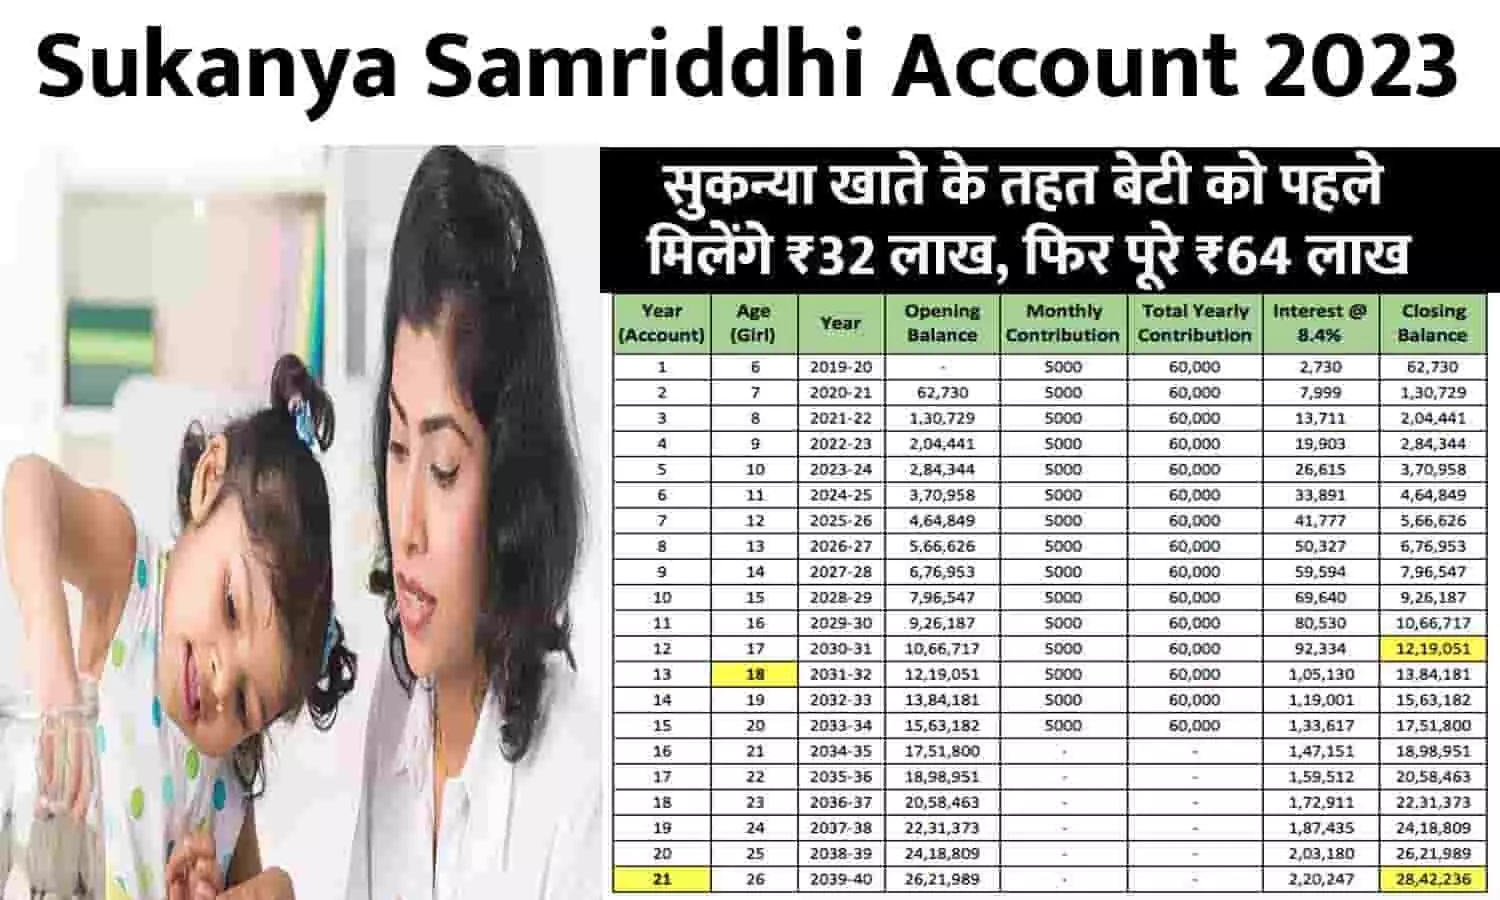 Sukanya Samriddhi Account Big Alert 2023: सुकन्या खाते के तहत बेटी को पहले मिलेंगे ₹32 लाख, फिर पूरे ₹64 लाख, जानिए Latest Update